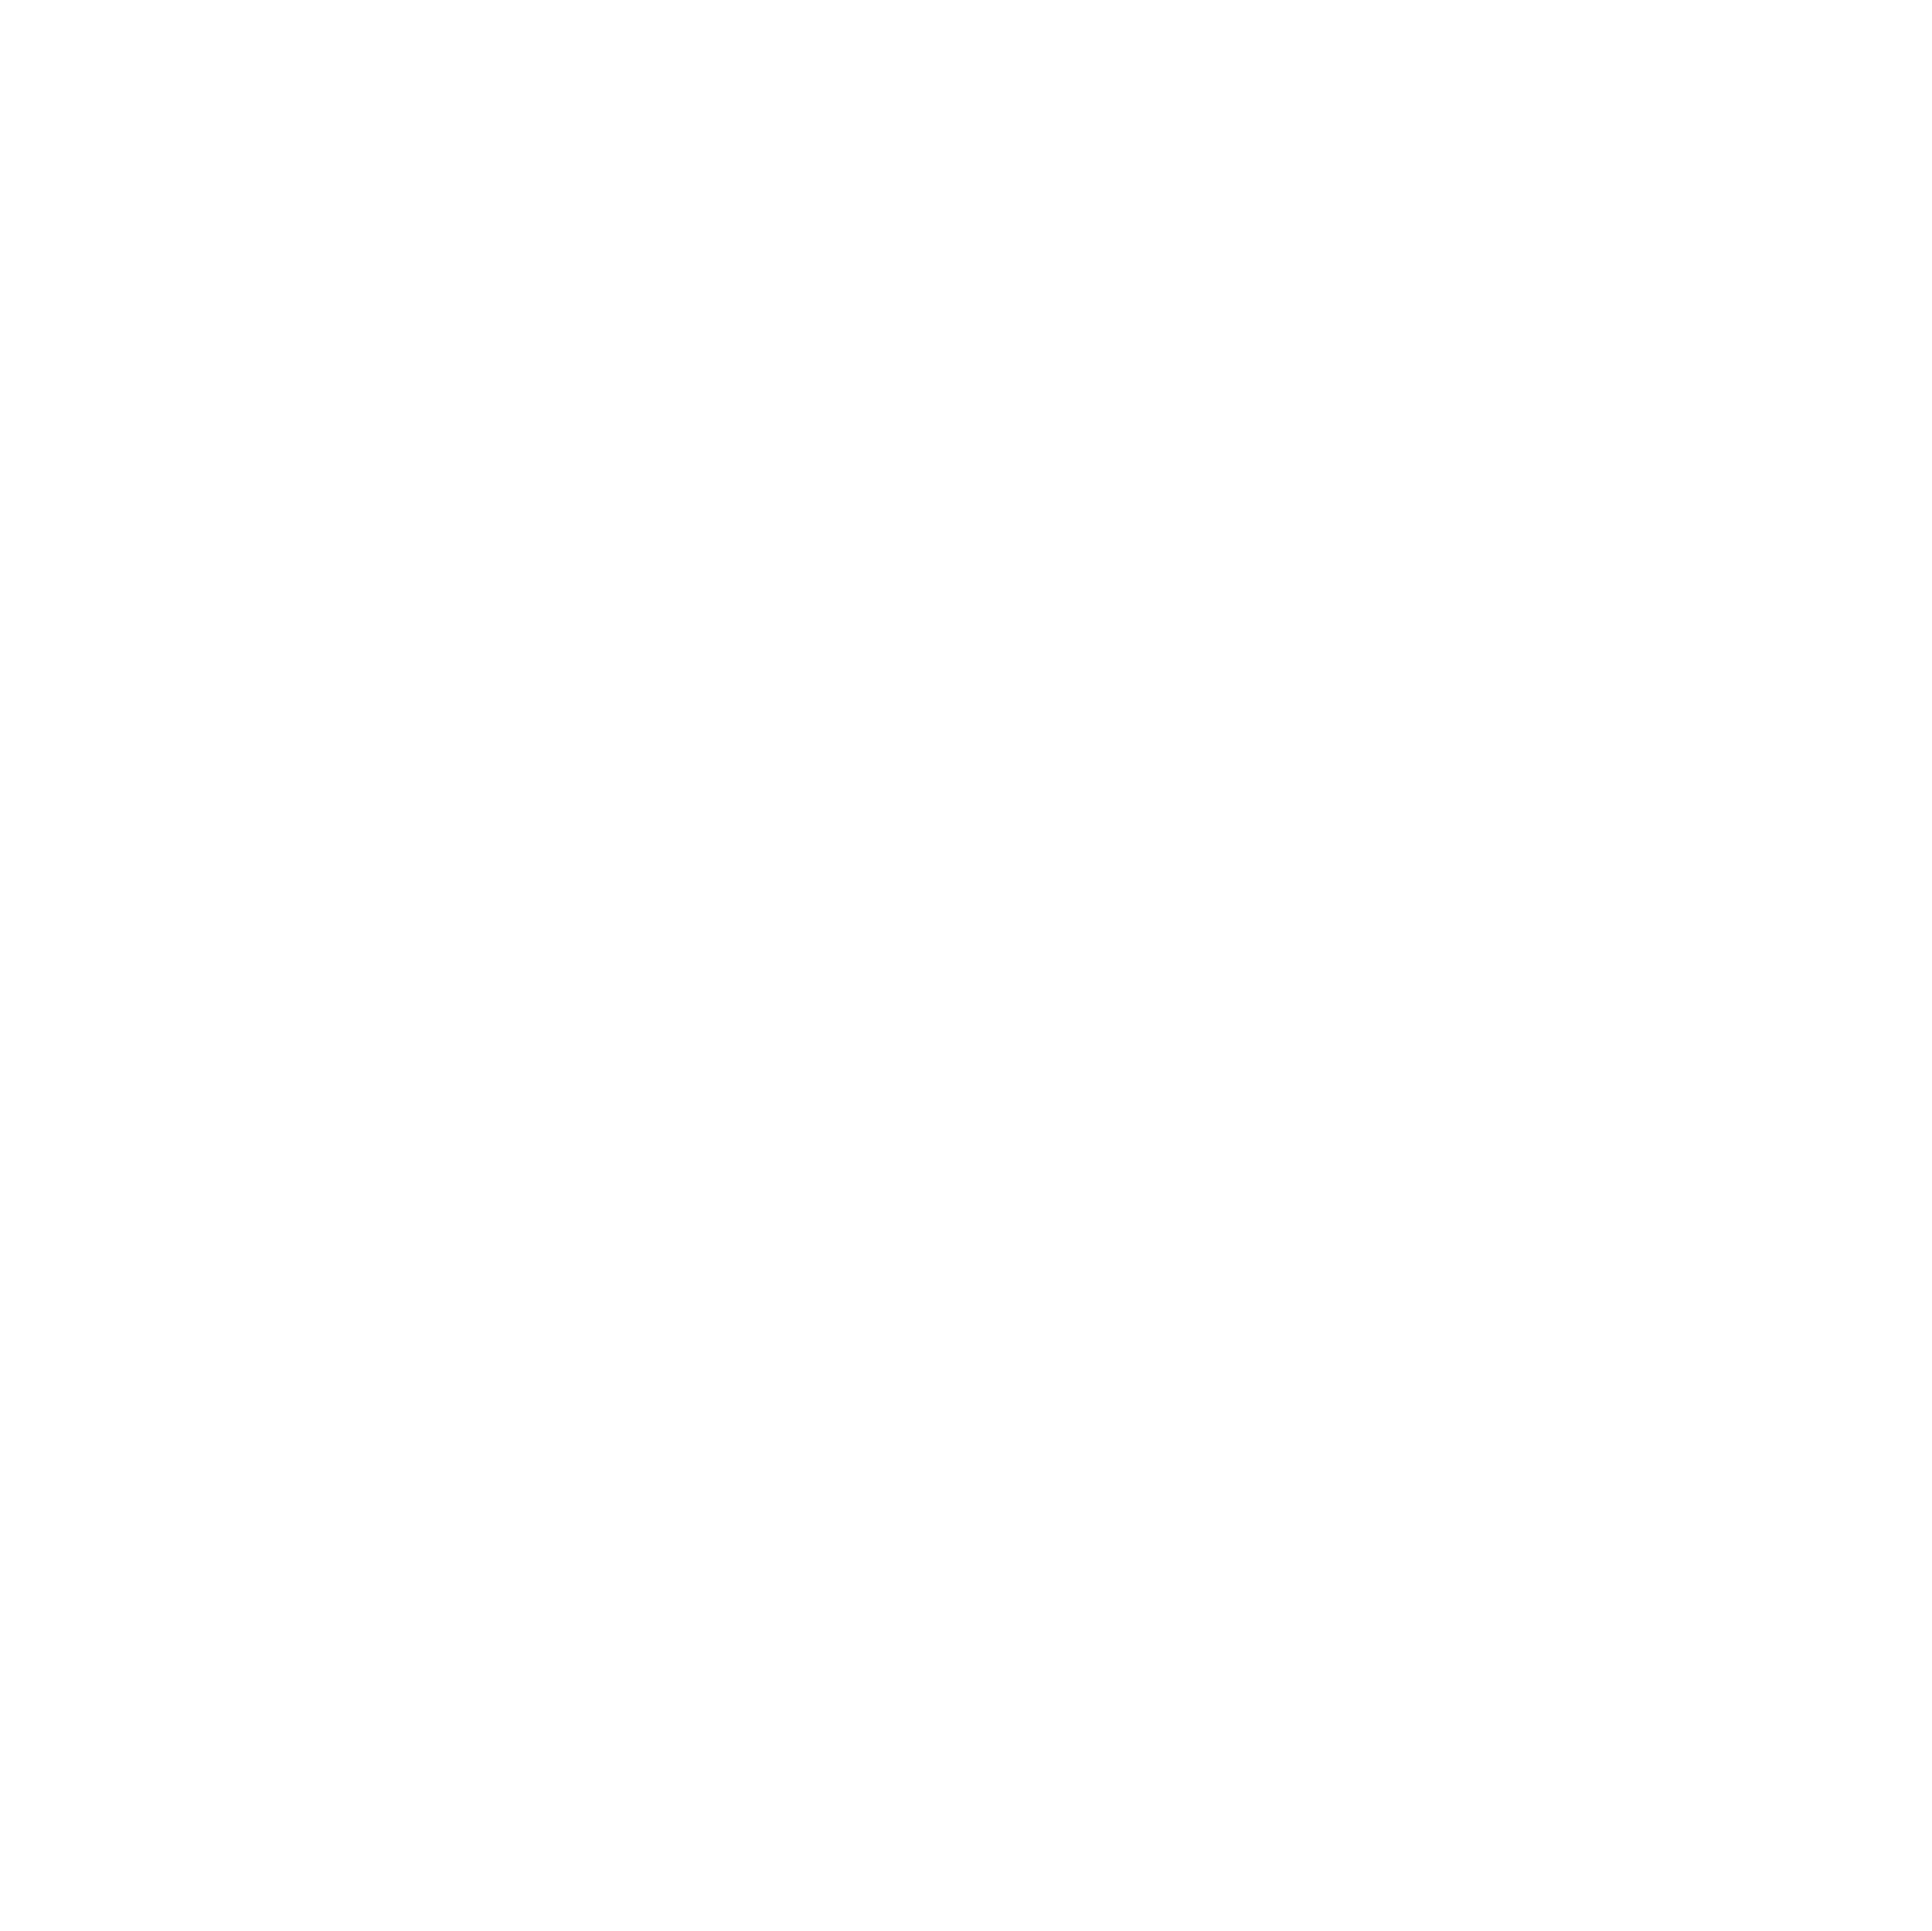 Pixel art adaptation of Instagram logo